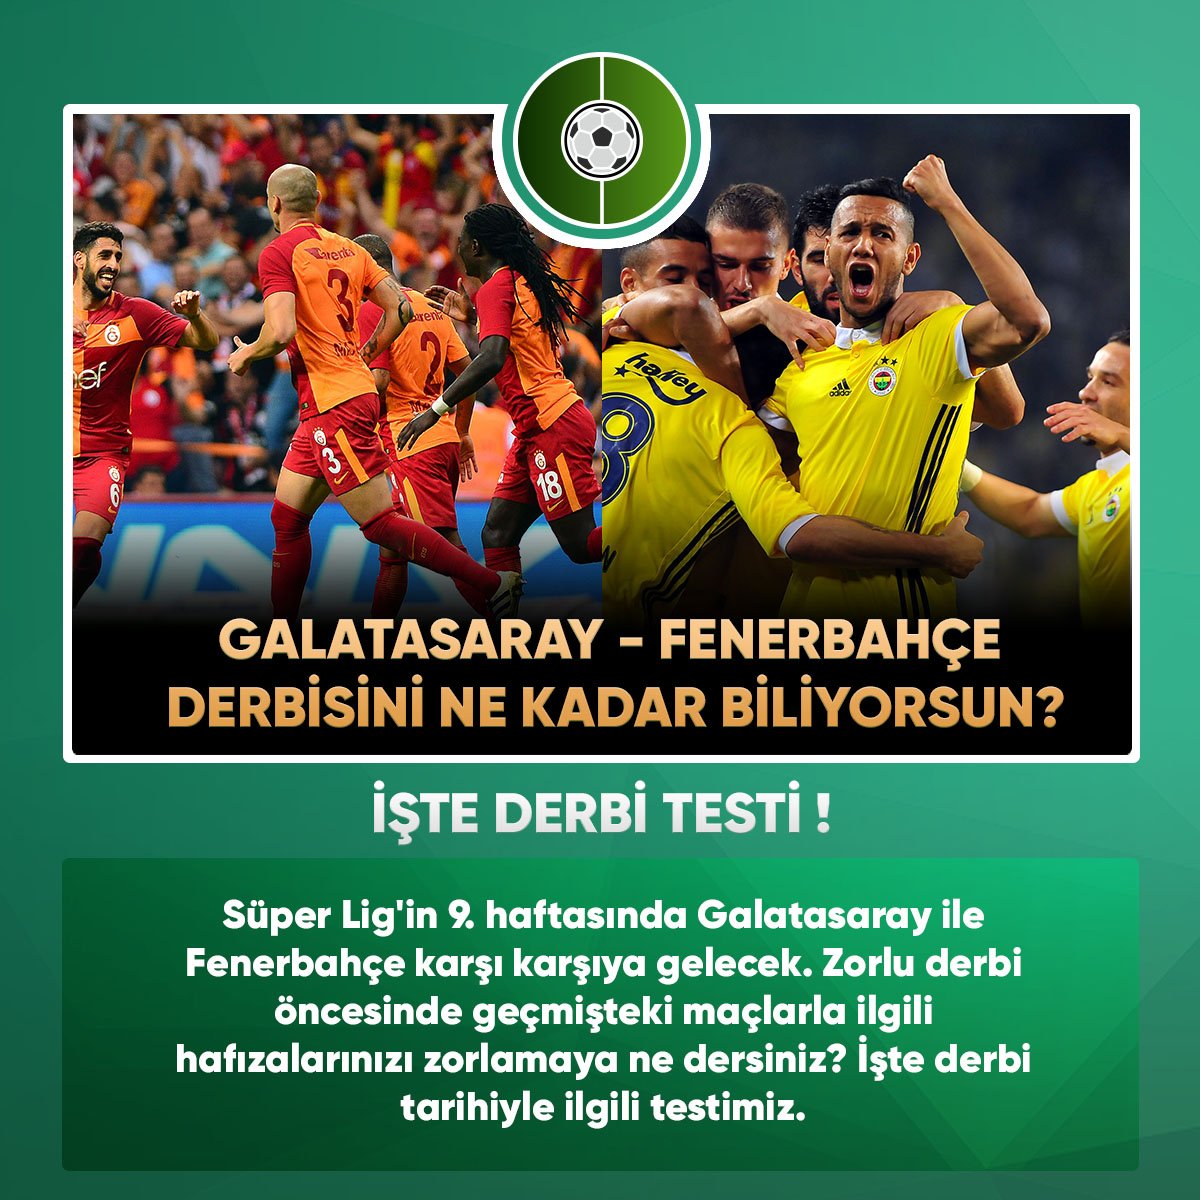 Galatasaray - Fenerbahçe derbi testi